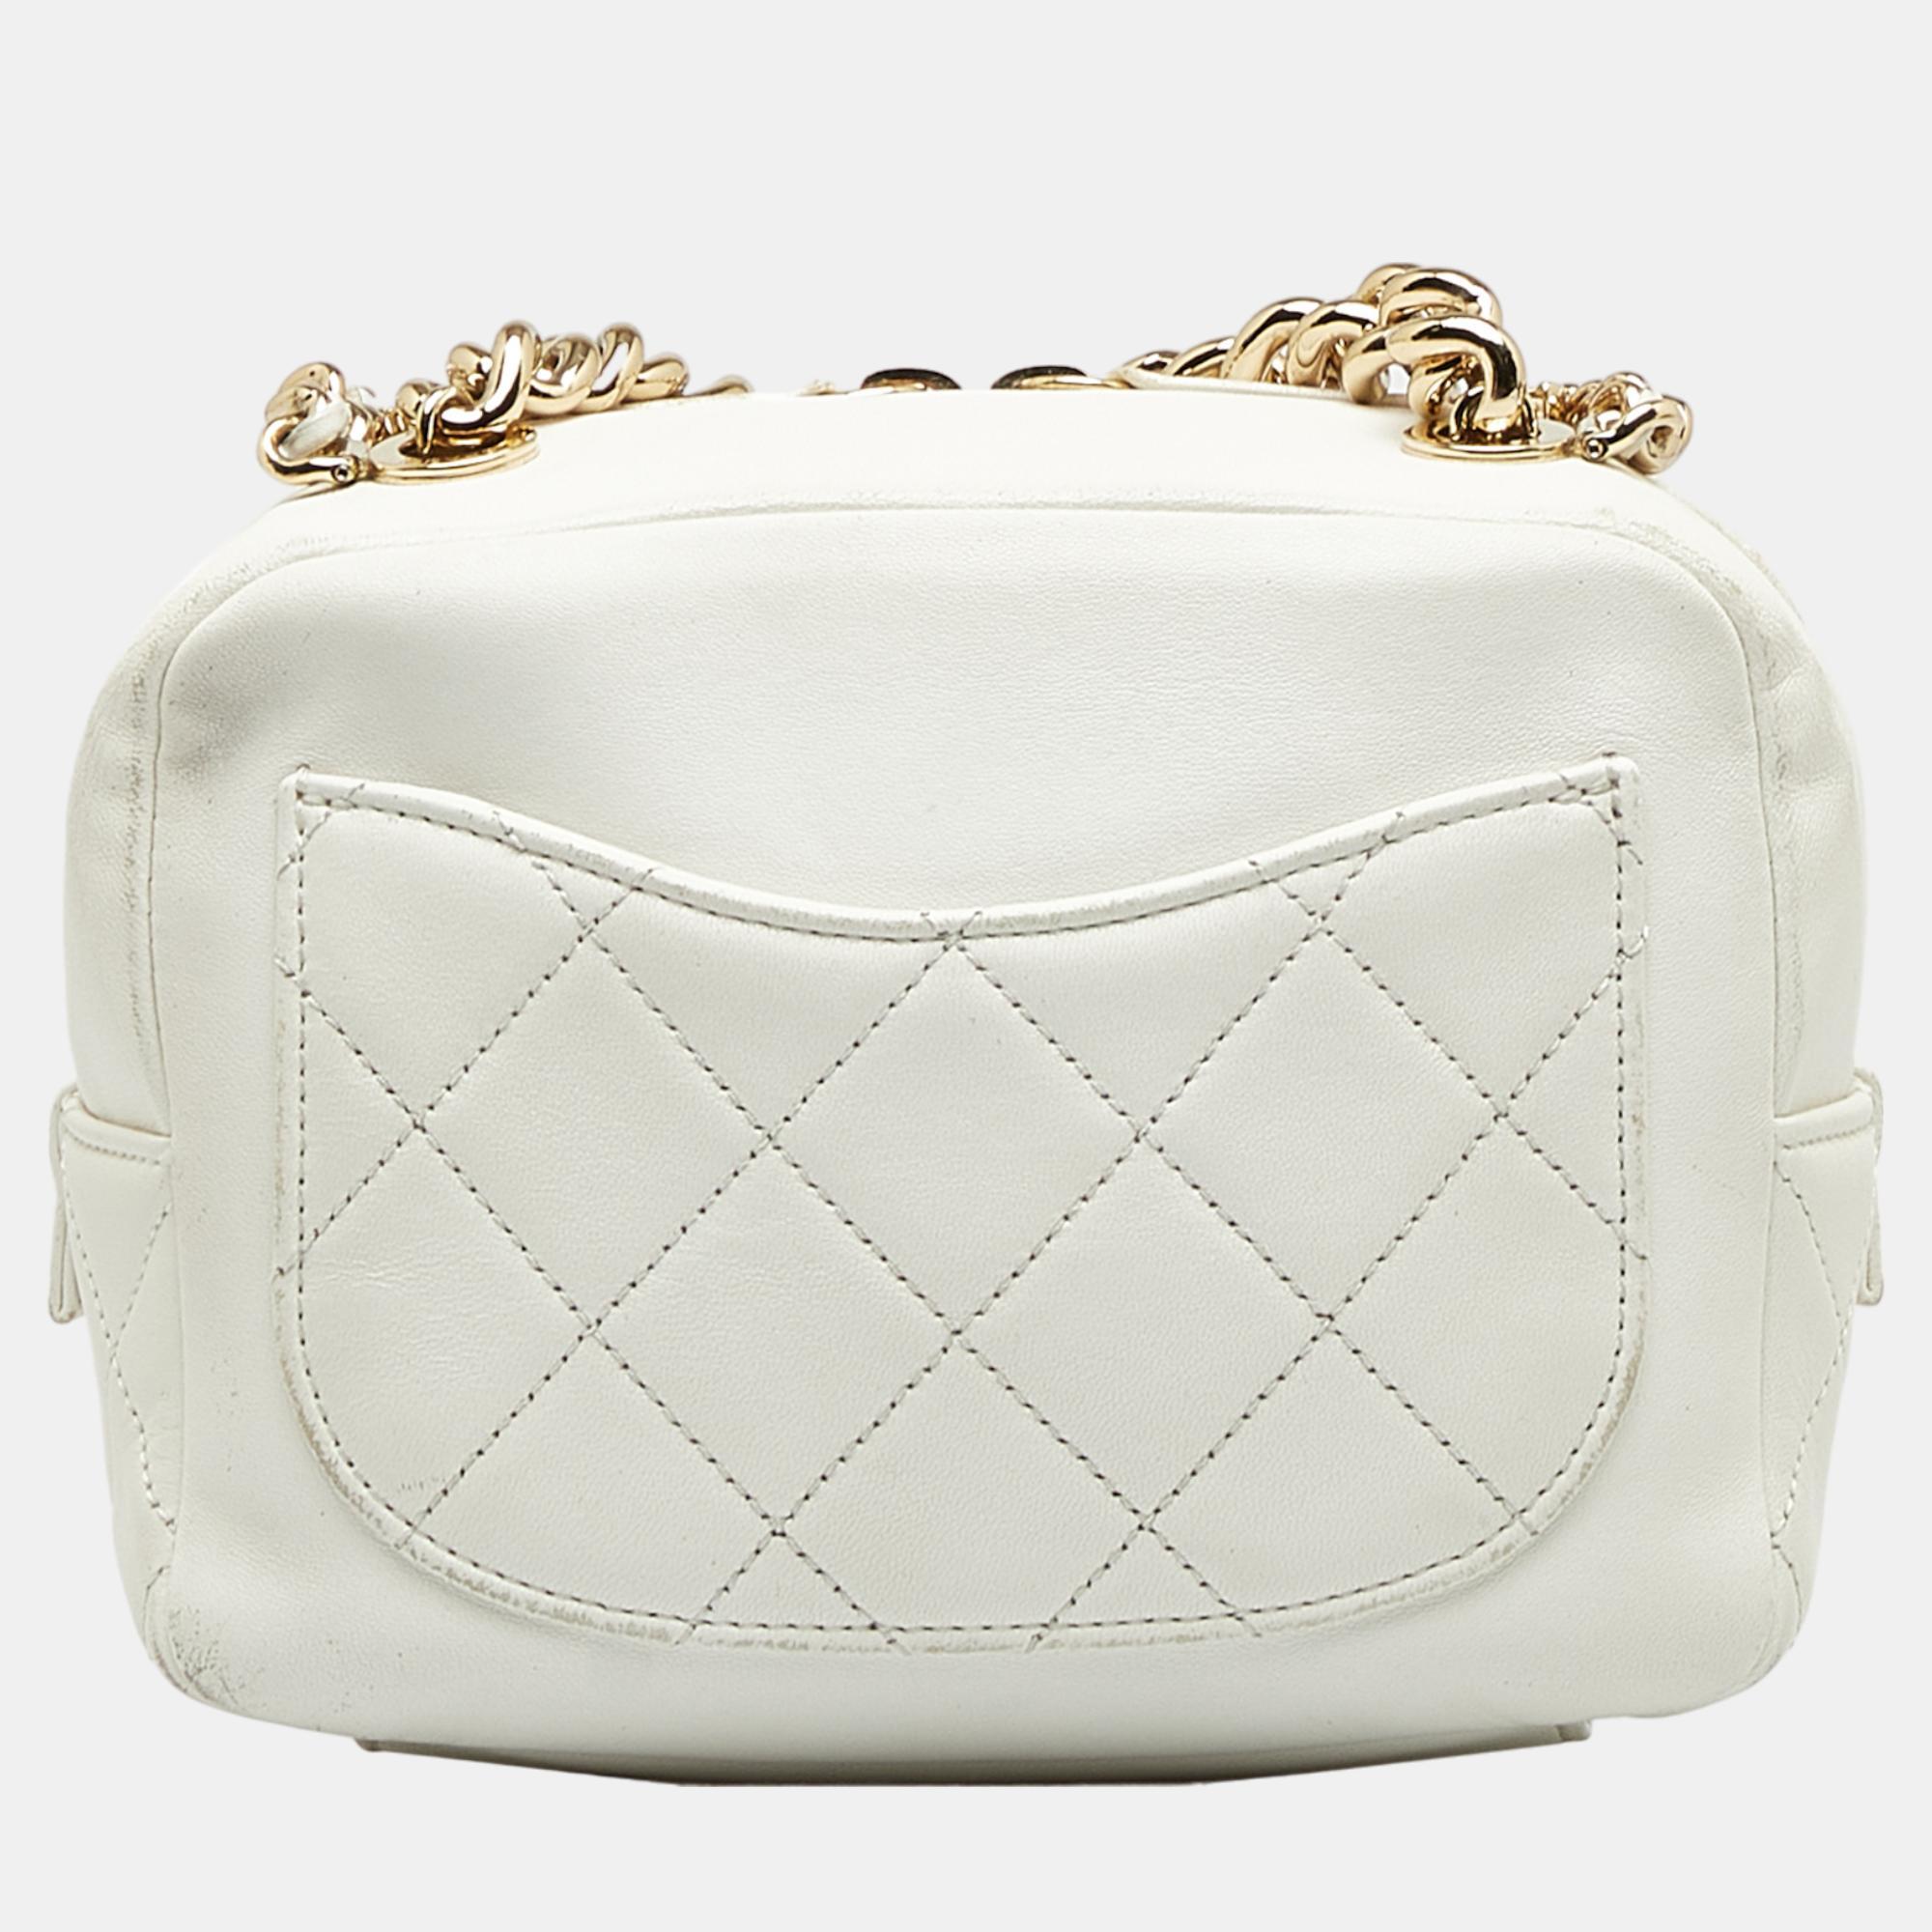 Chanel White Studded CC Camera Bag